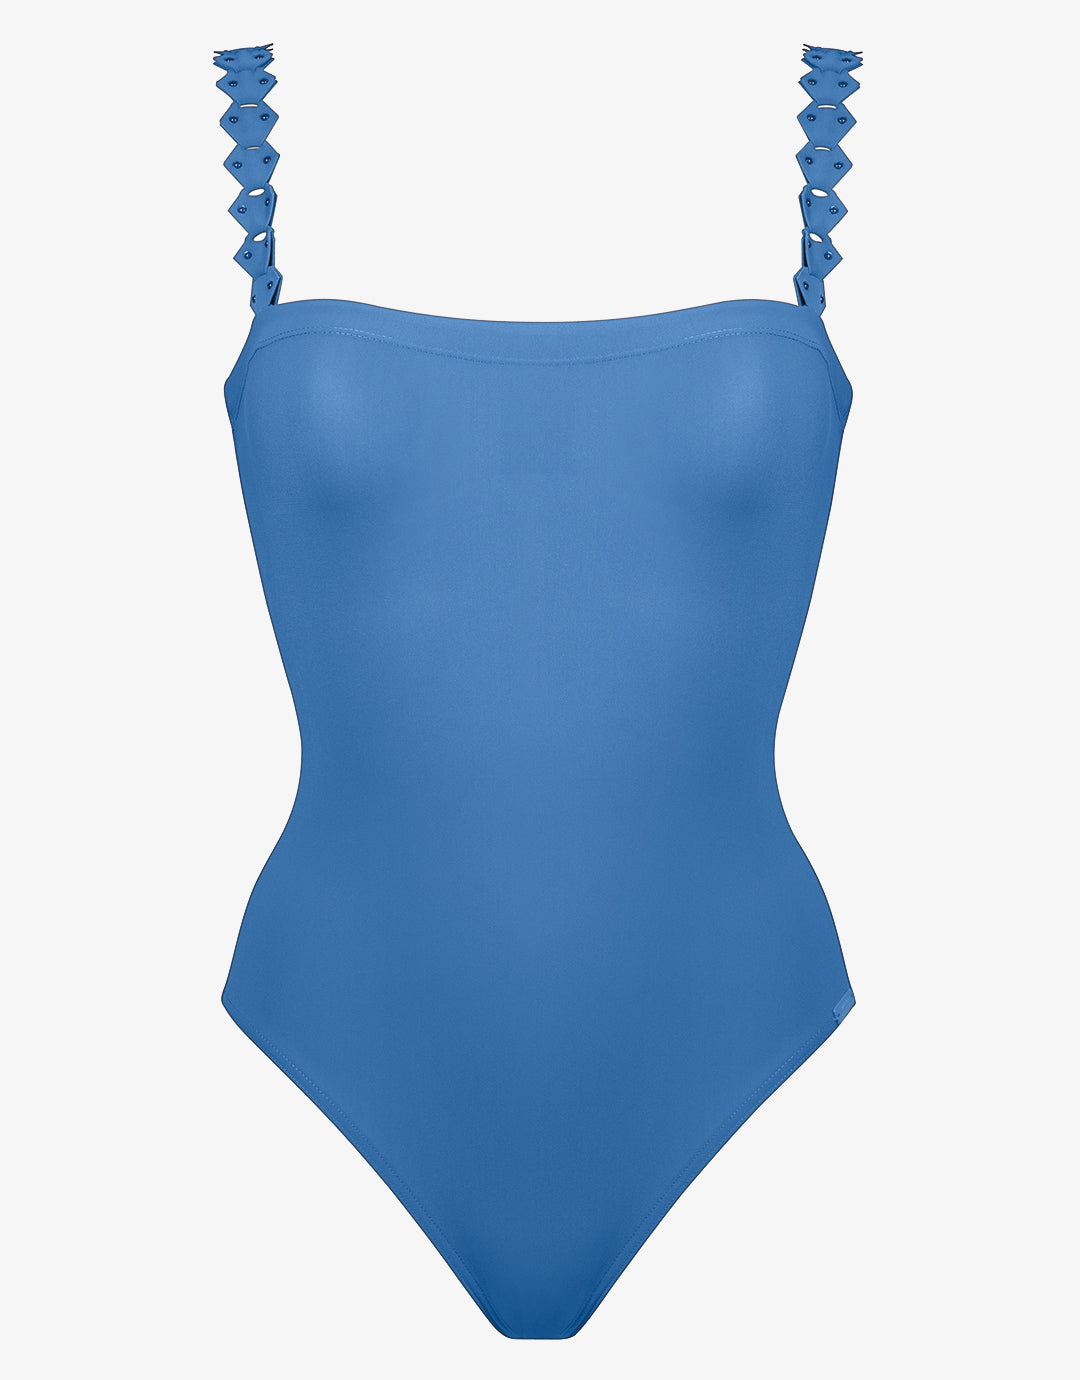 Softline Bandeau Swimsuit - Air - Simply Beach UK